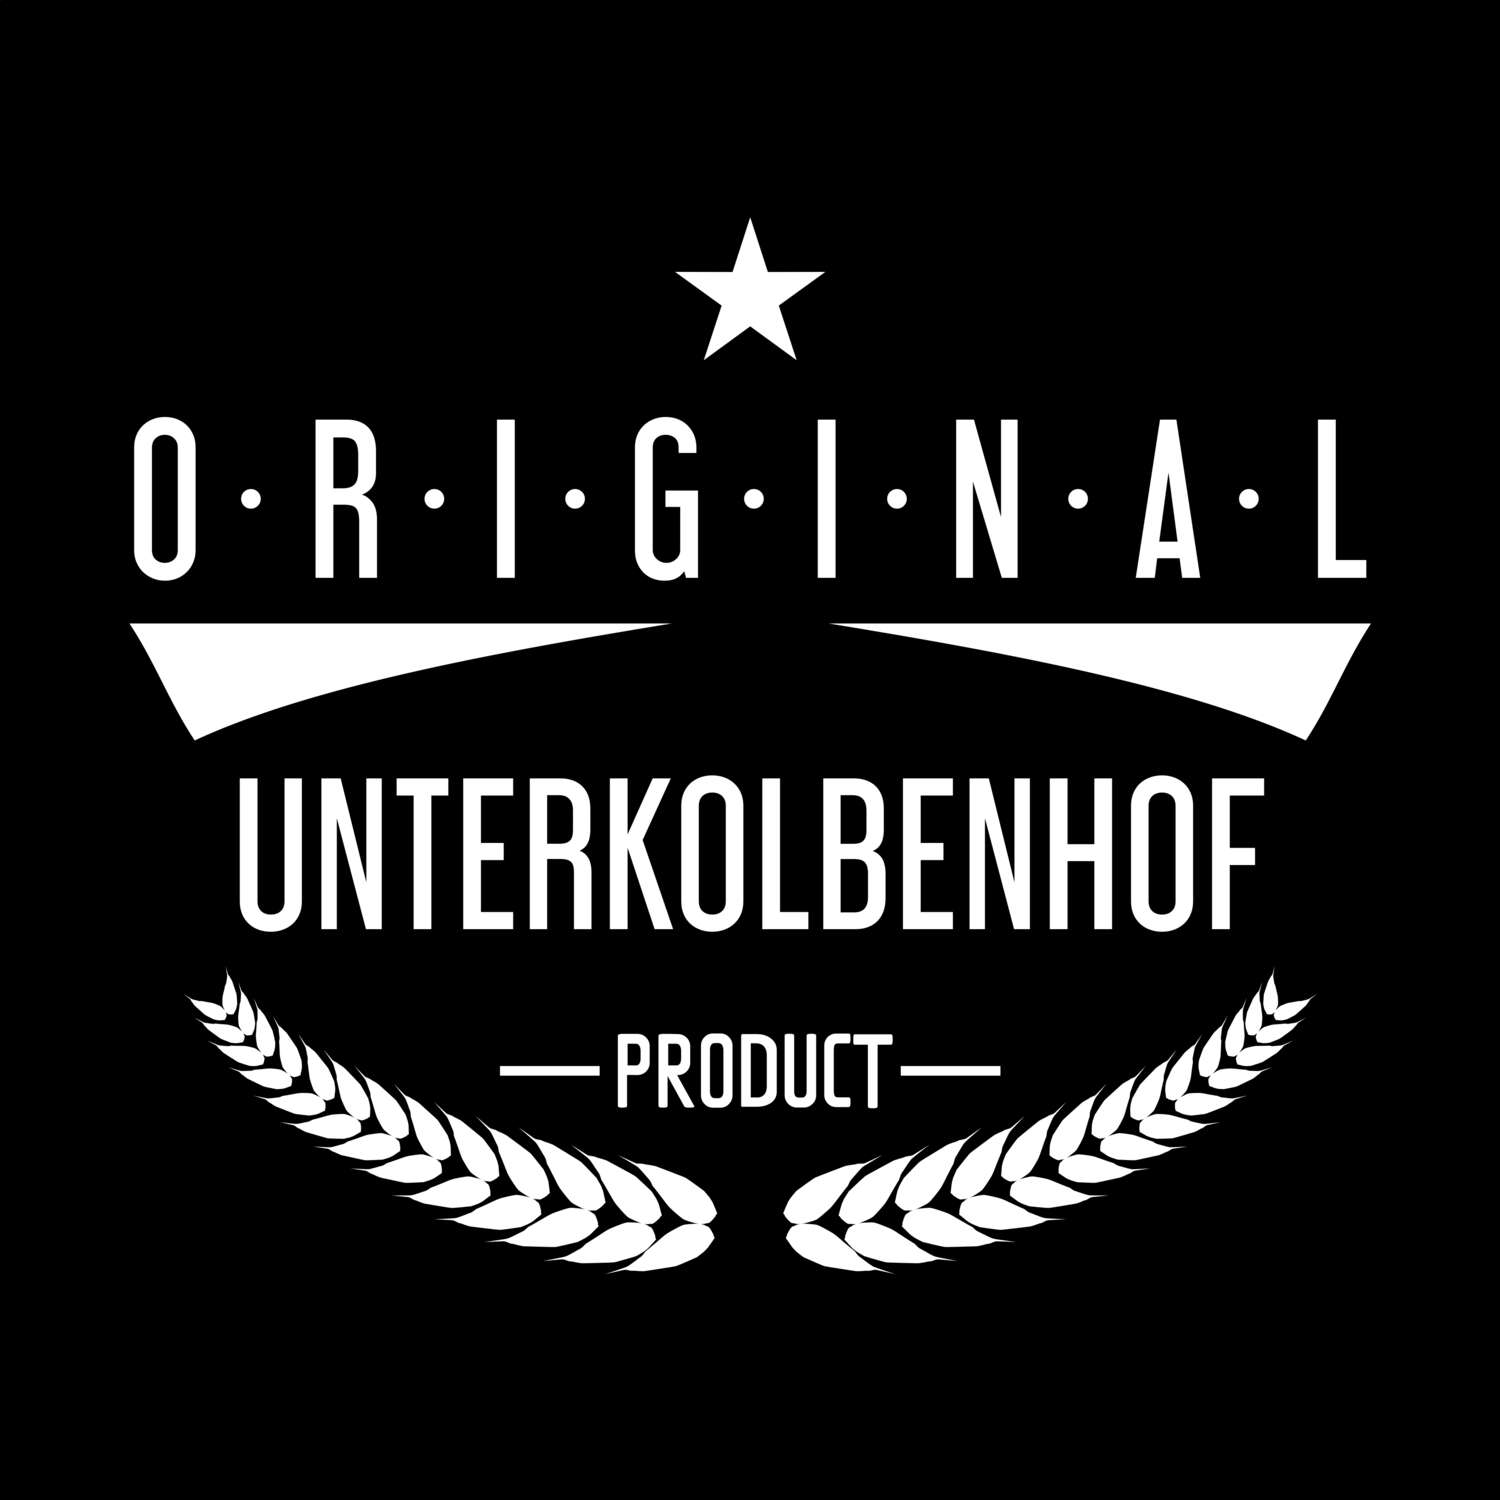 Unterkolbenhof T-Shirt »Original Product«